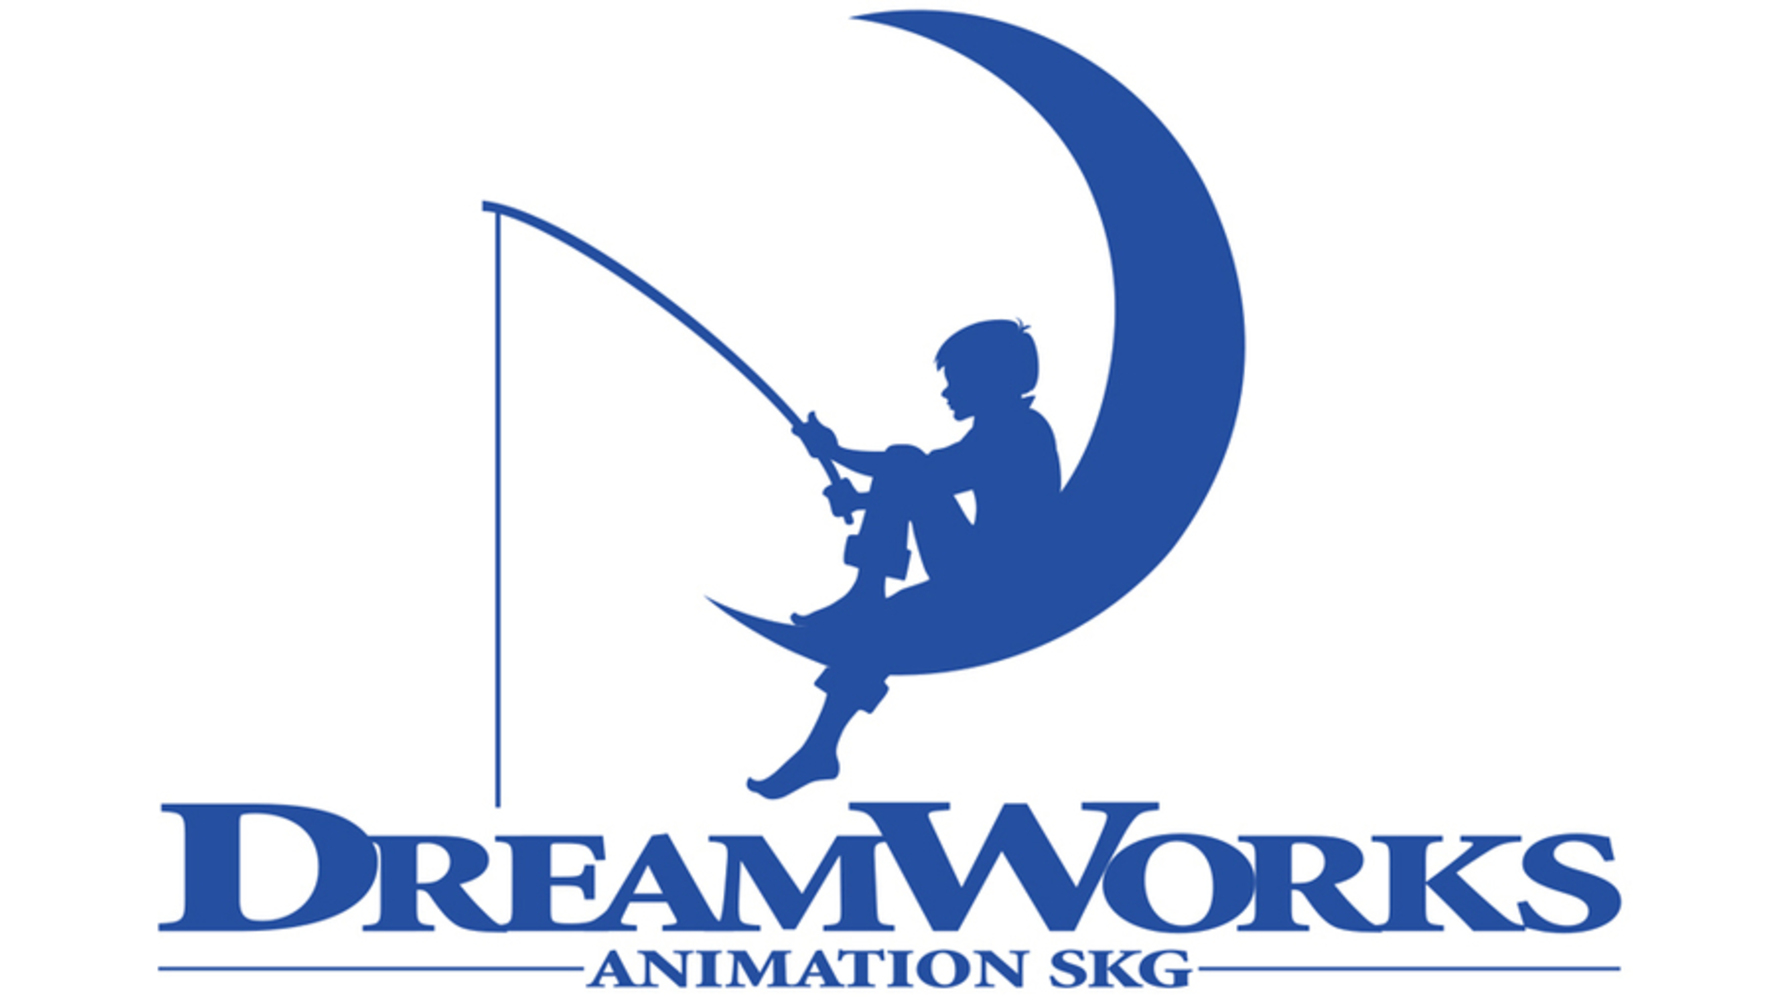 Dreamworks animation logo.thumb